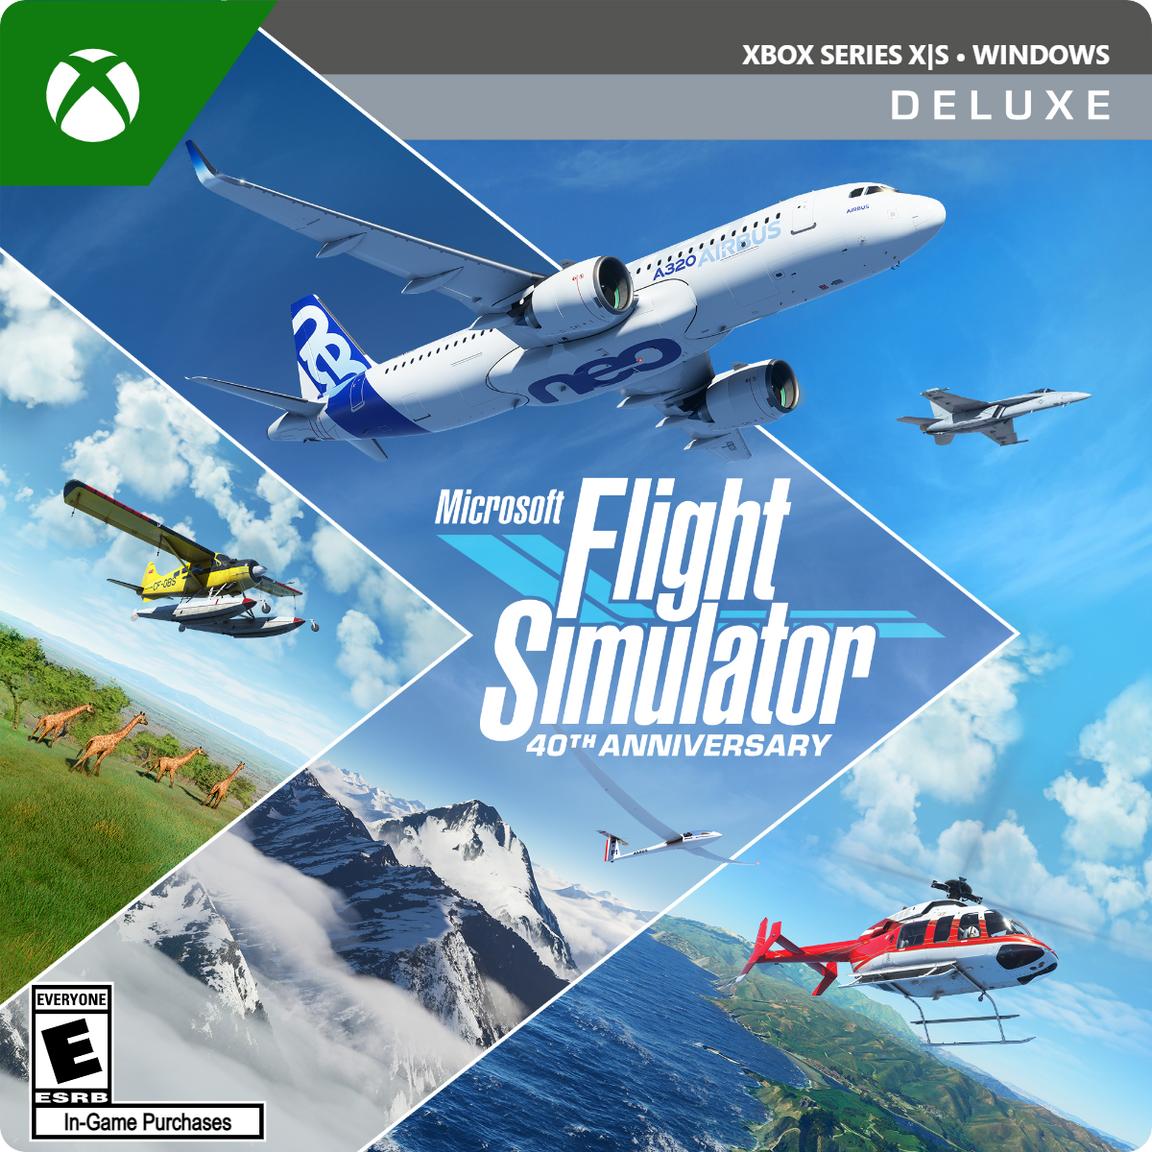 Microsoft Flight Simulator Deluxe 40th Anniversary Edition - Xbox Series X/S and Windows -  G7Q-00134